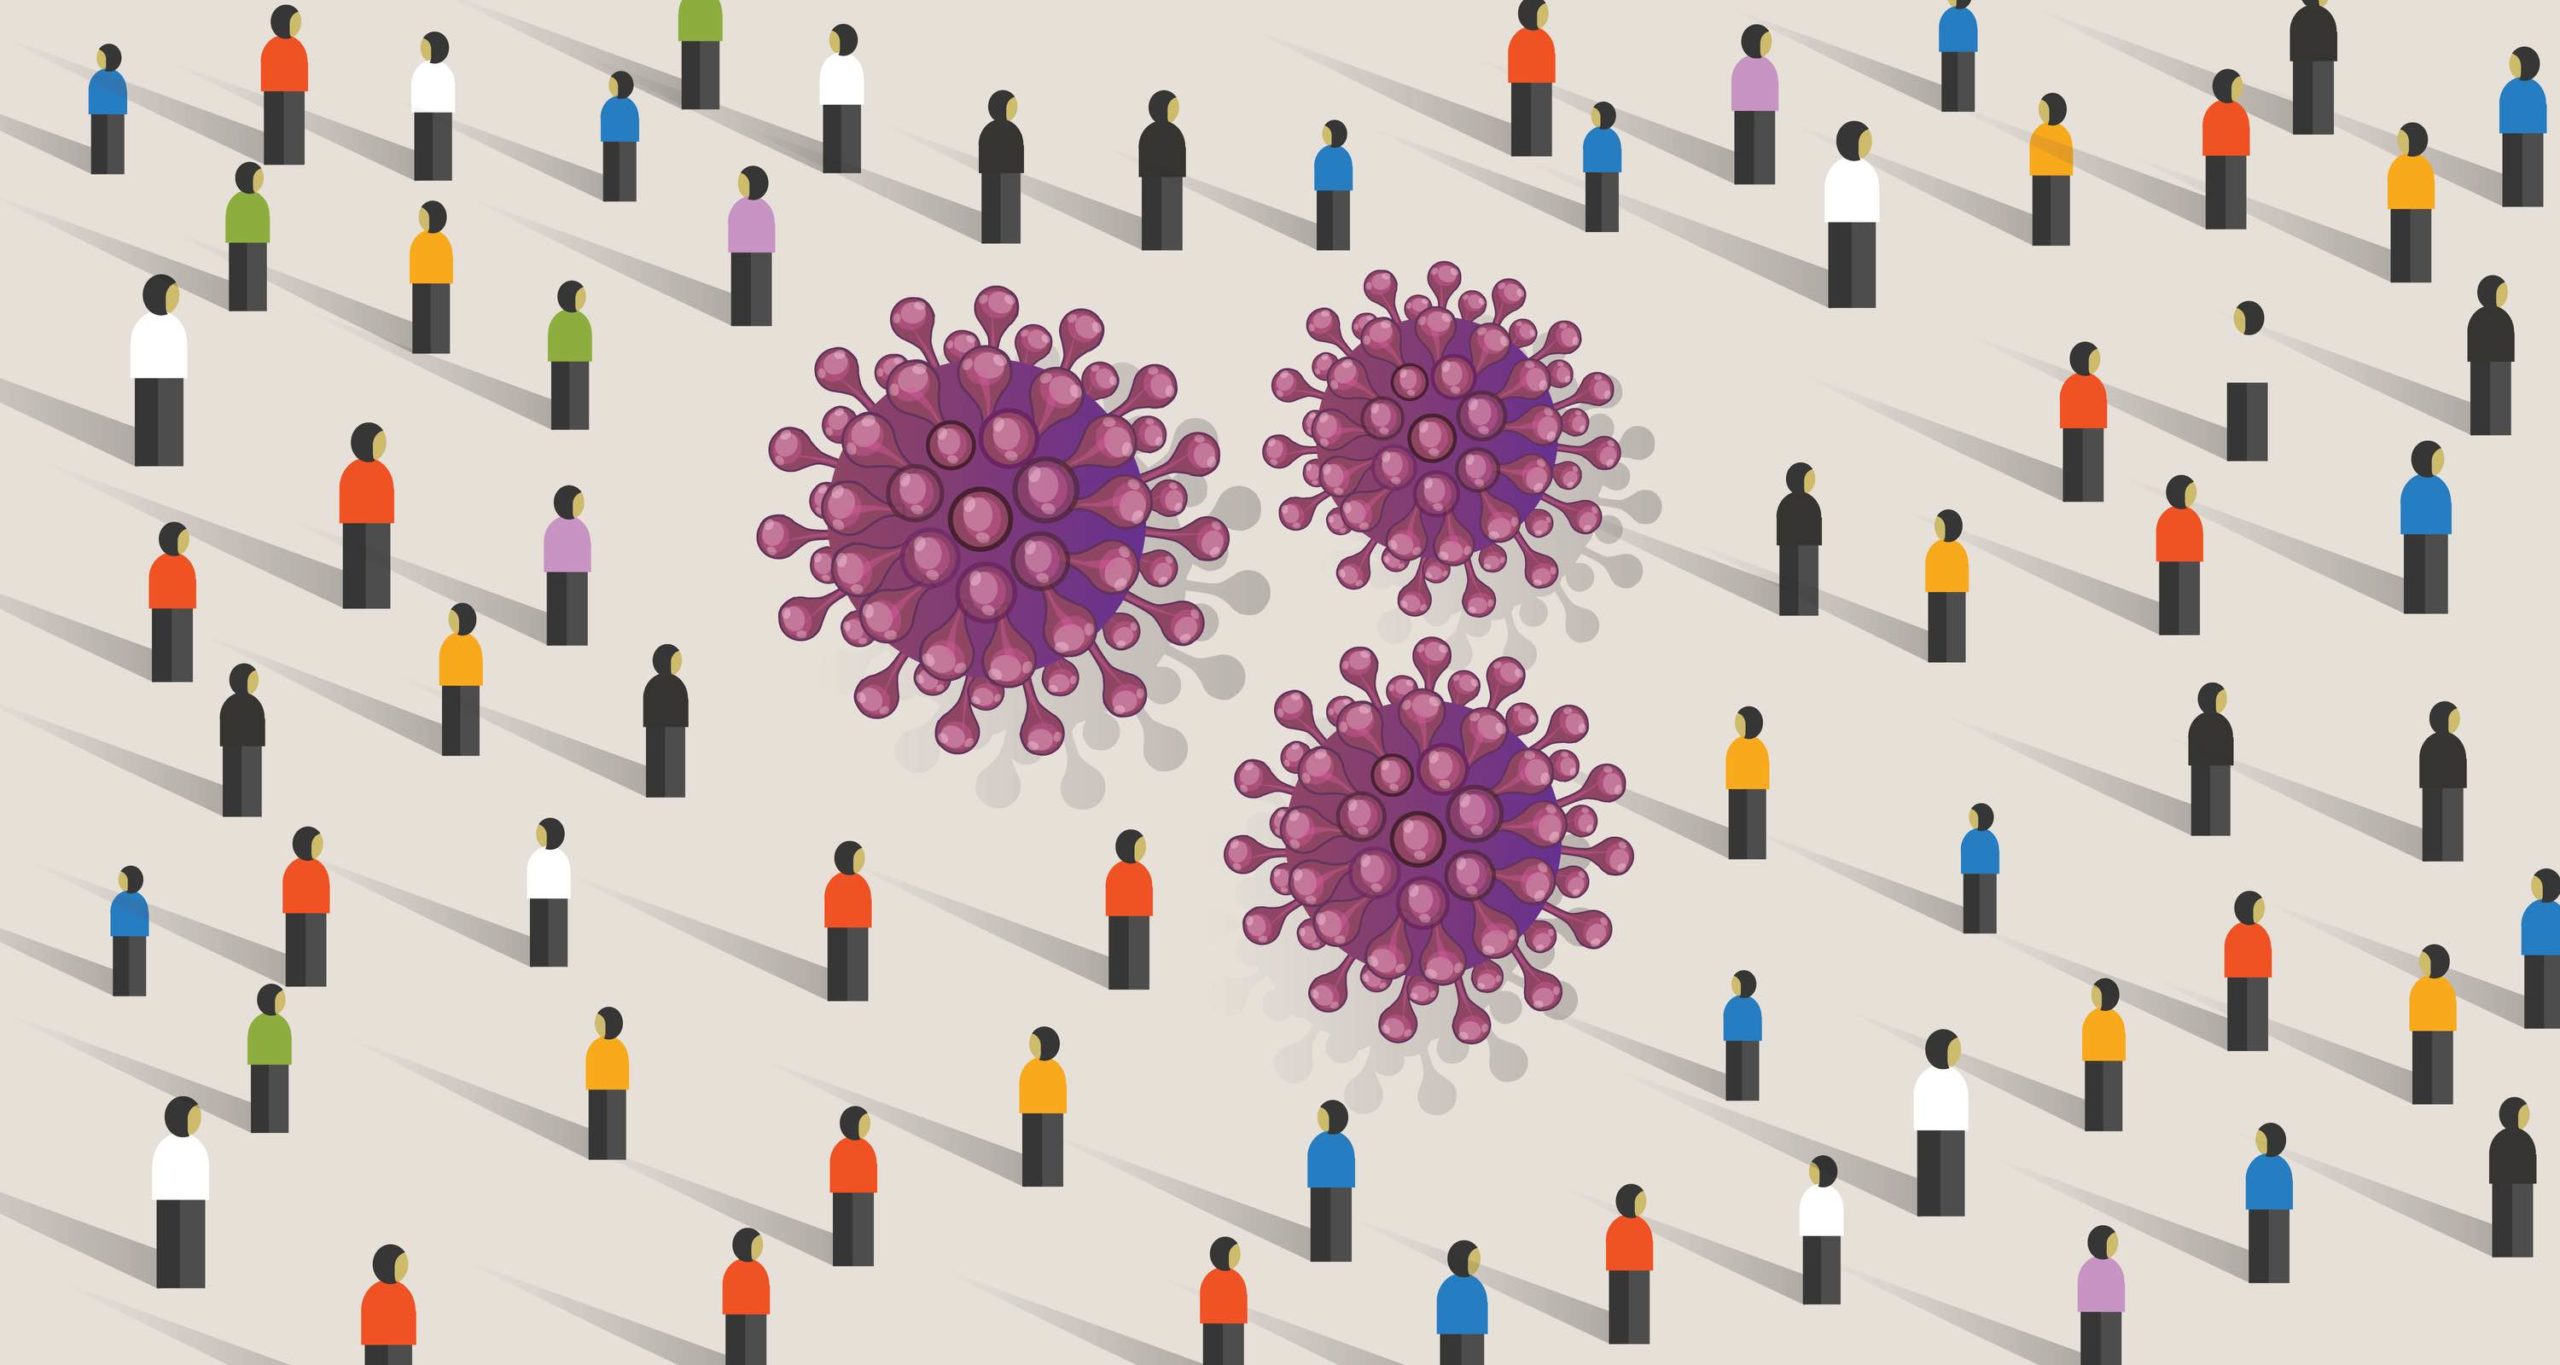 Illustration of virus epidemic transmission in a crowd